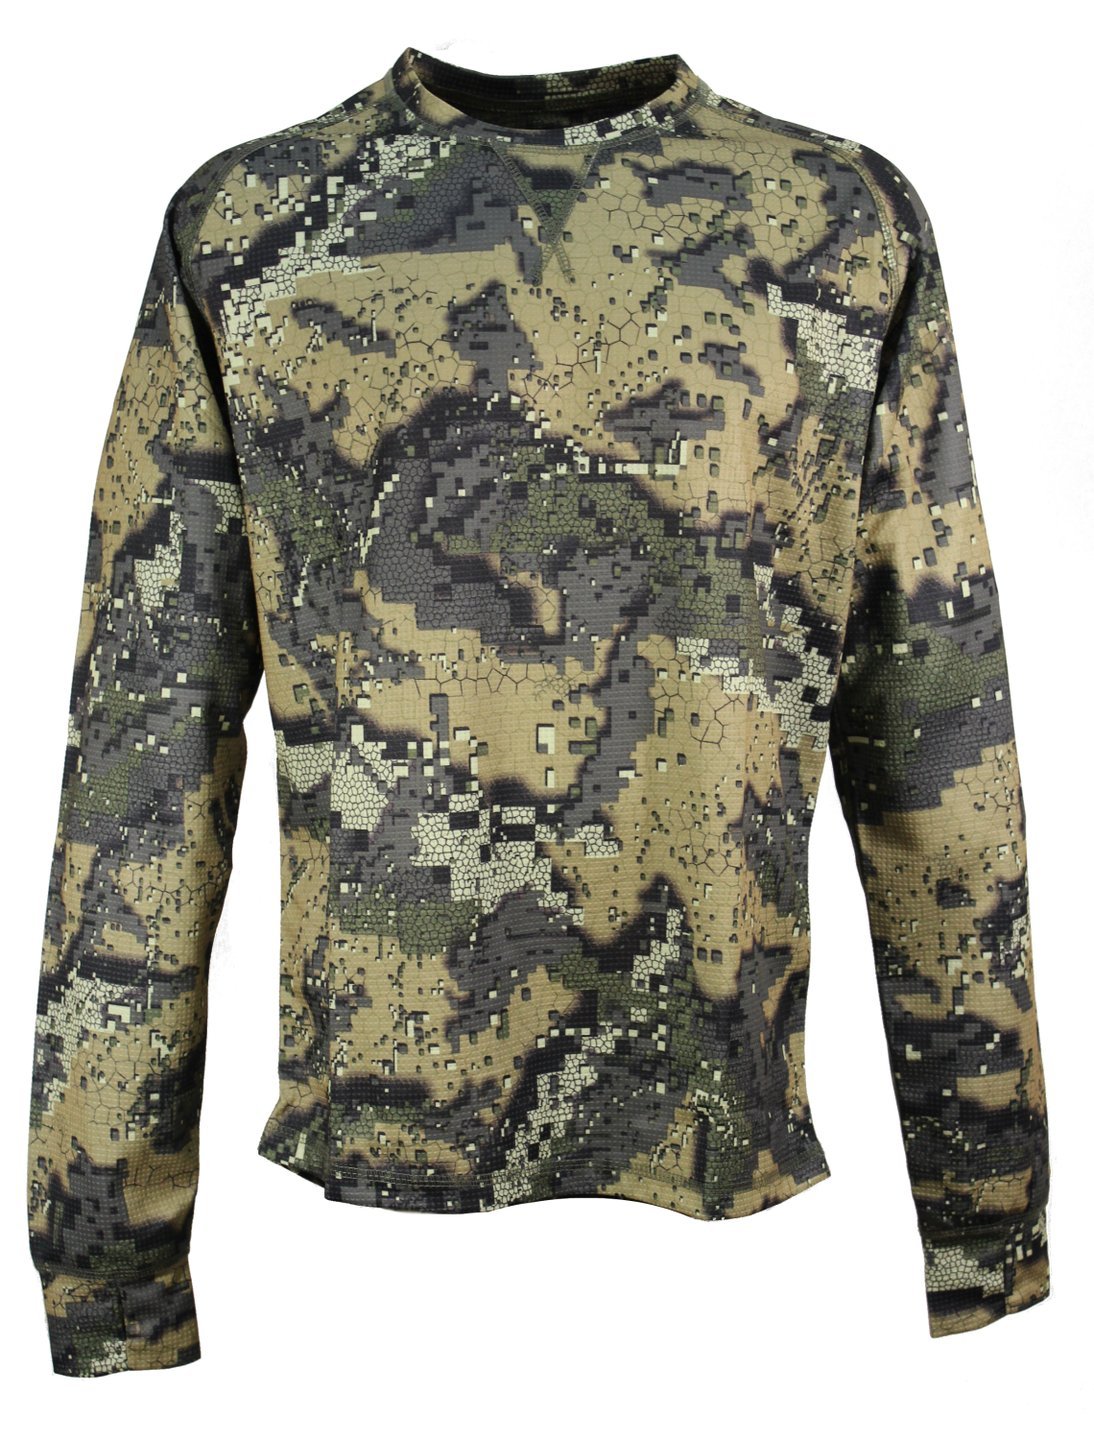 Джемпер охотничий  Remington Men's  Camouflage T-Shirt  APG Hunting Camo, цвет Optifade, р. XXL (RM1305-999)